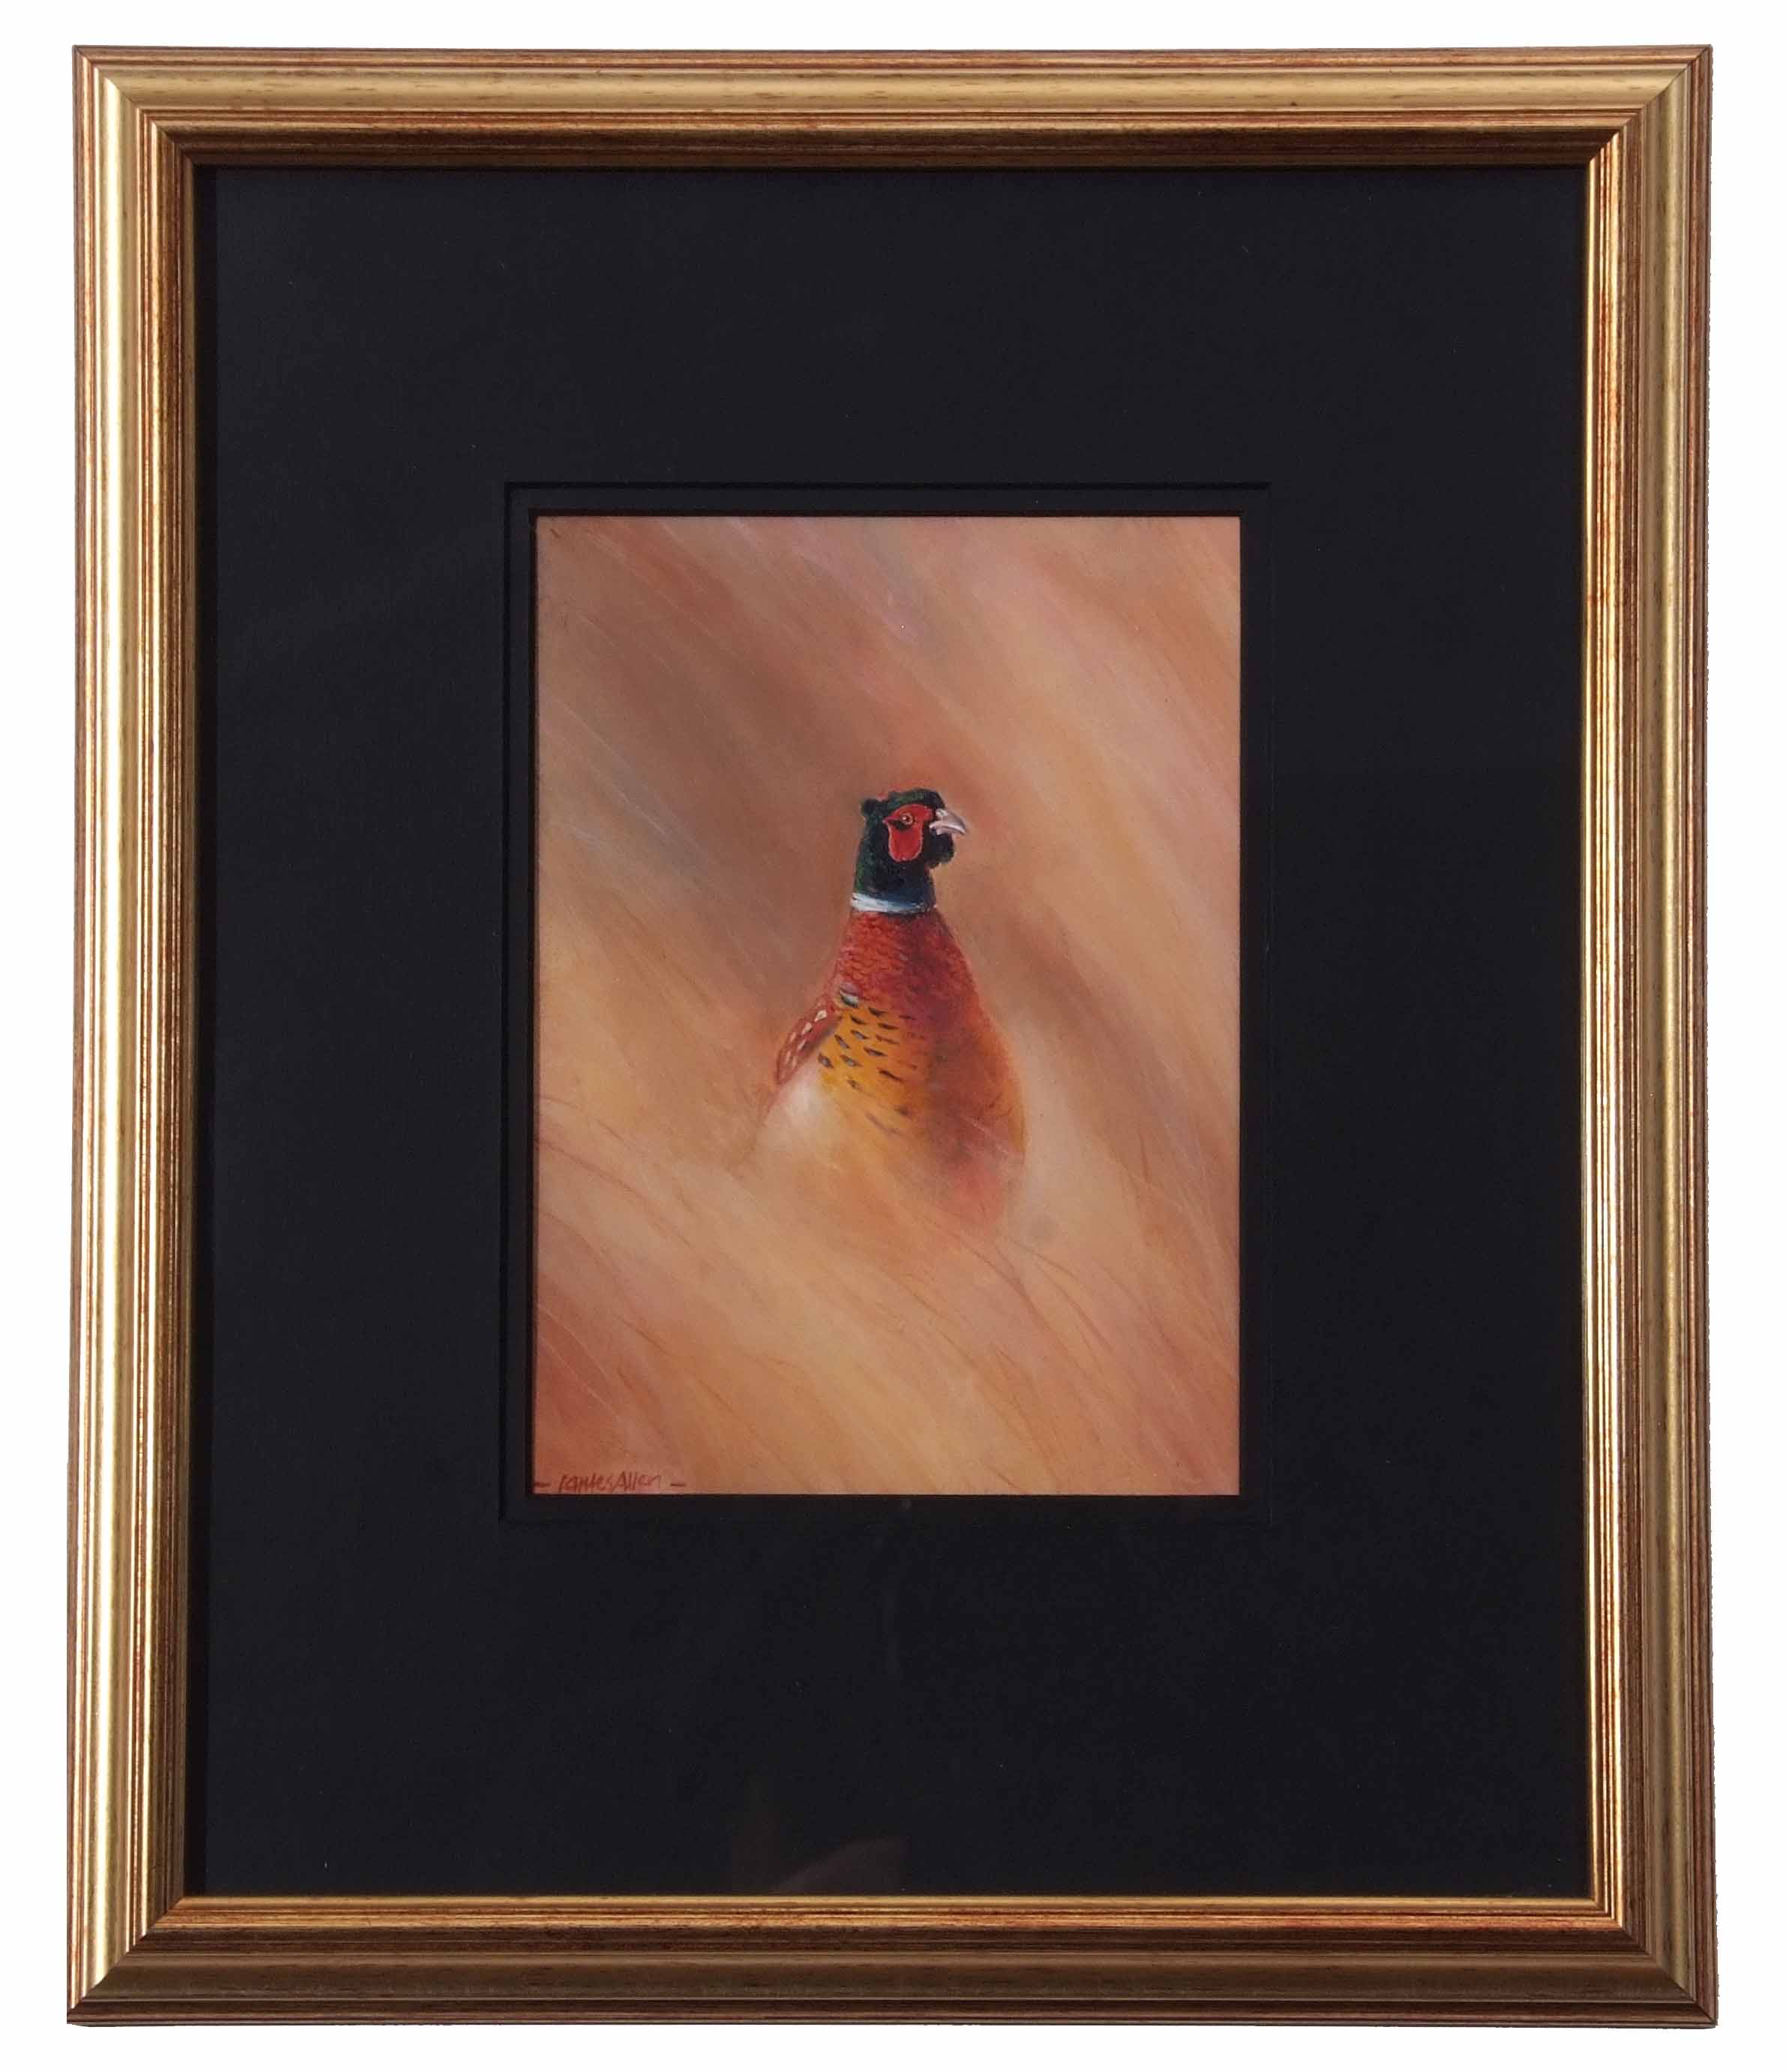 James J Allen (contemporary), "Morning Pheasant", oil on board, signed lower left, 19 x 13cm